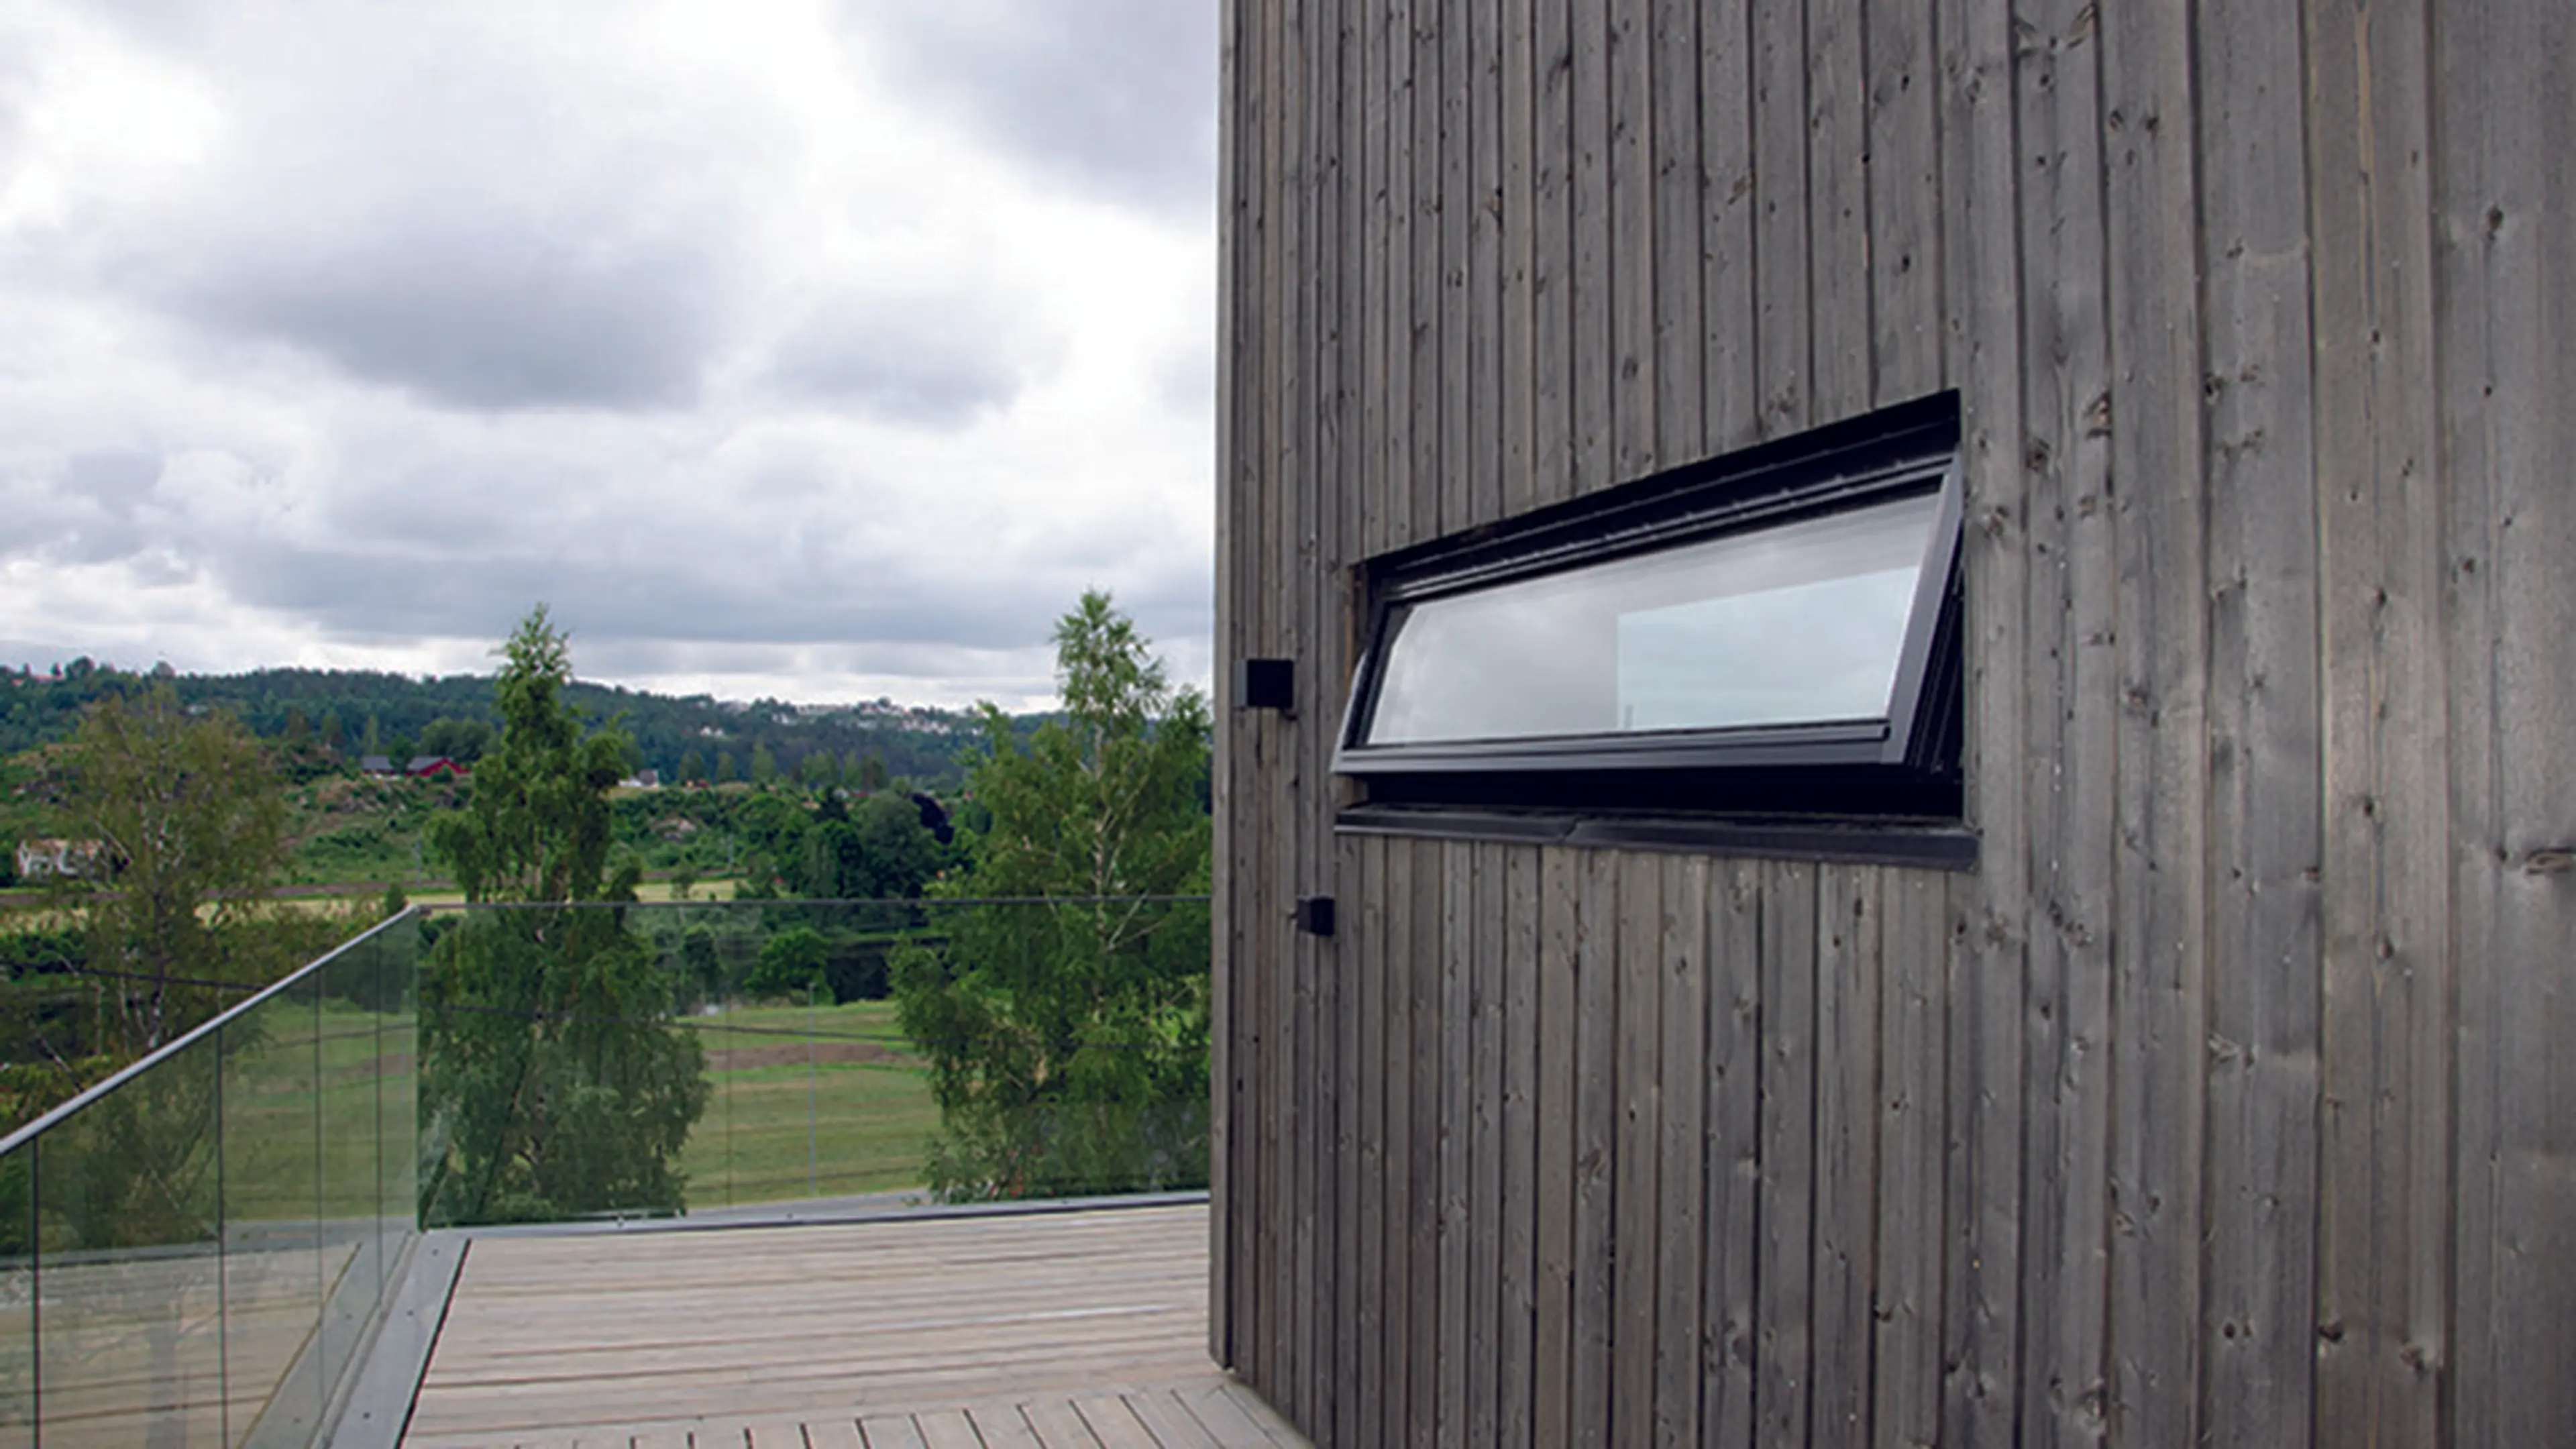 Toppsvingt vindu fra Uldal med sorte rammer.